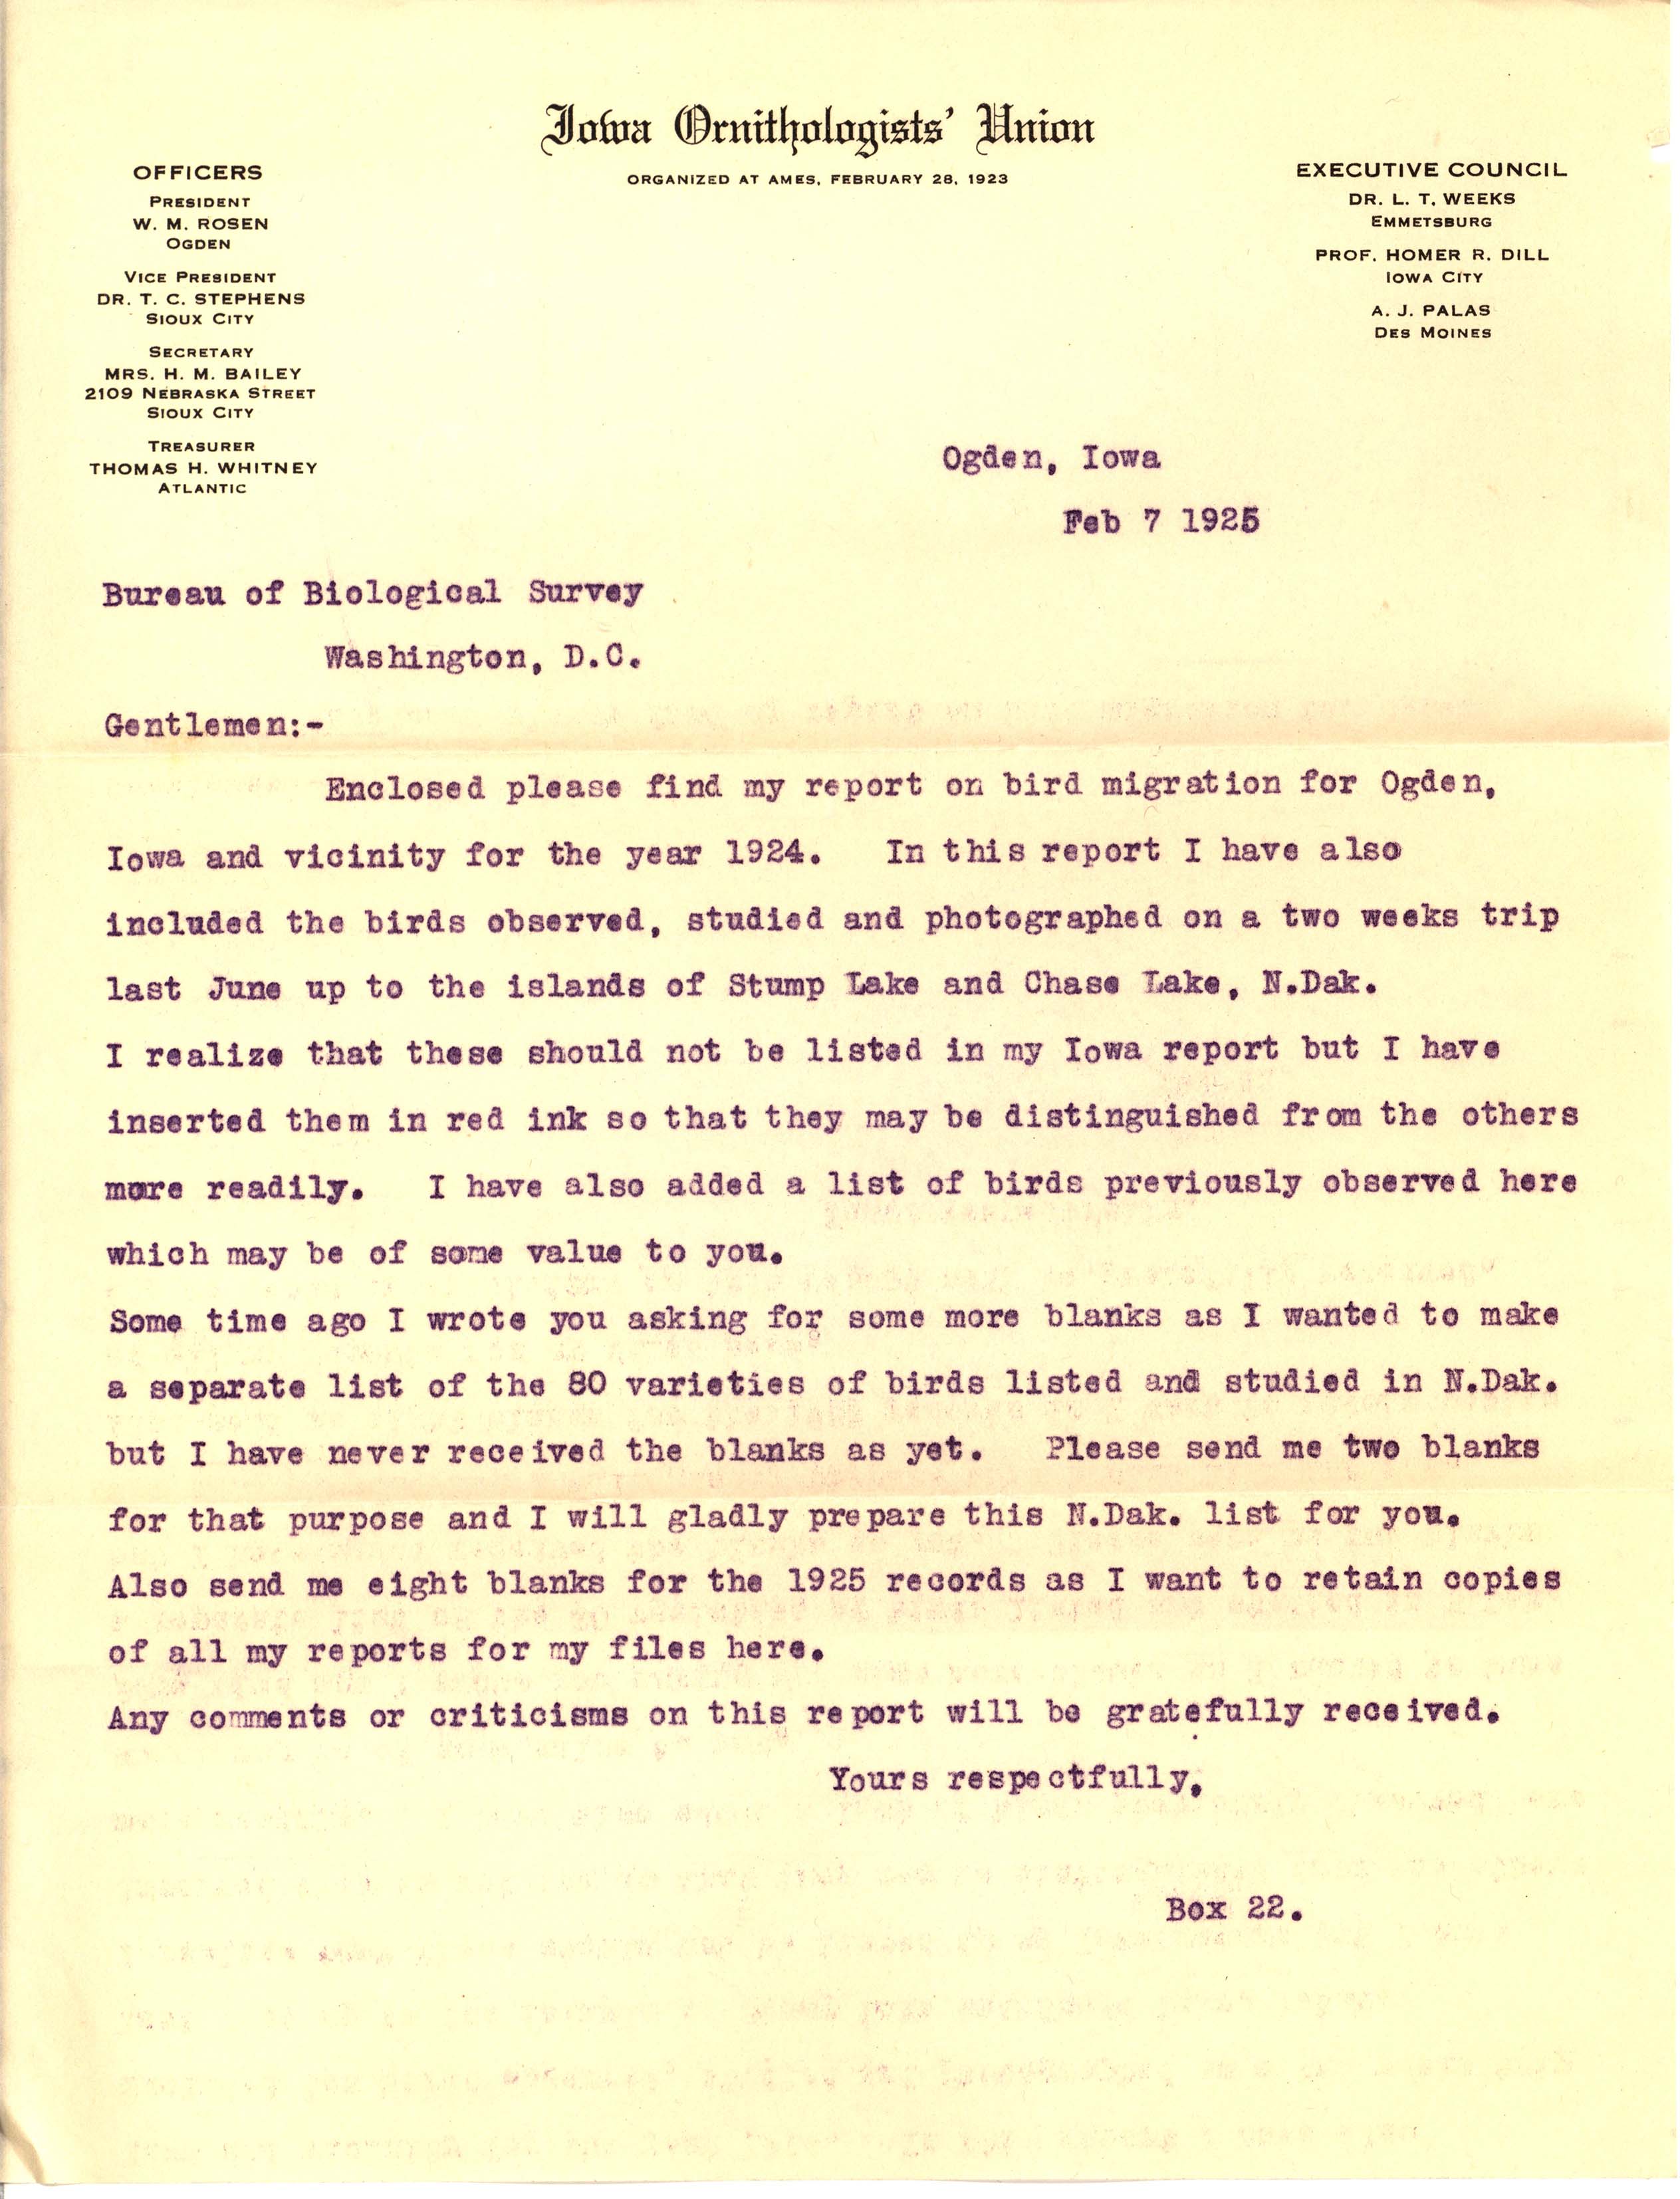 Walter Rosene letter to the United States Bureau of Biological Survey regarding a 1924 bird migration report, February 7, 1925